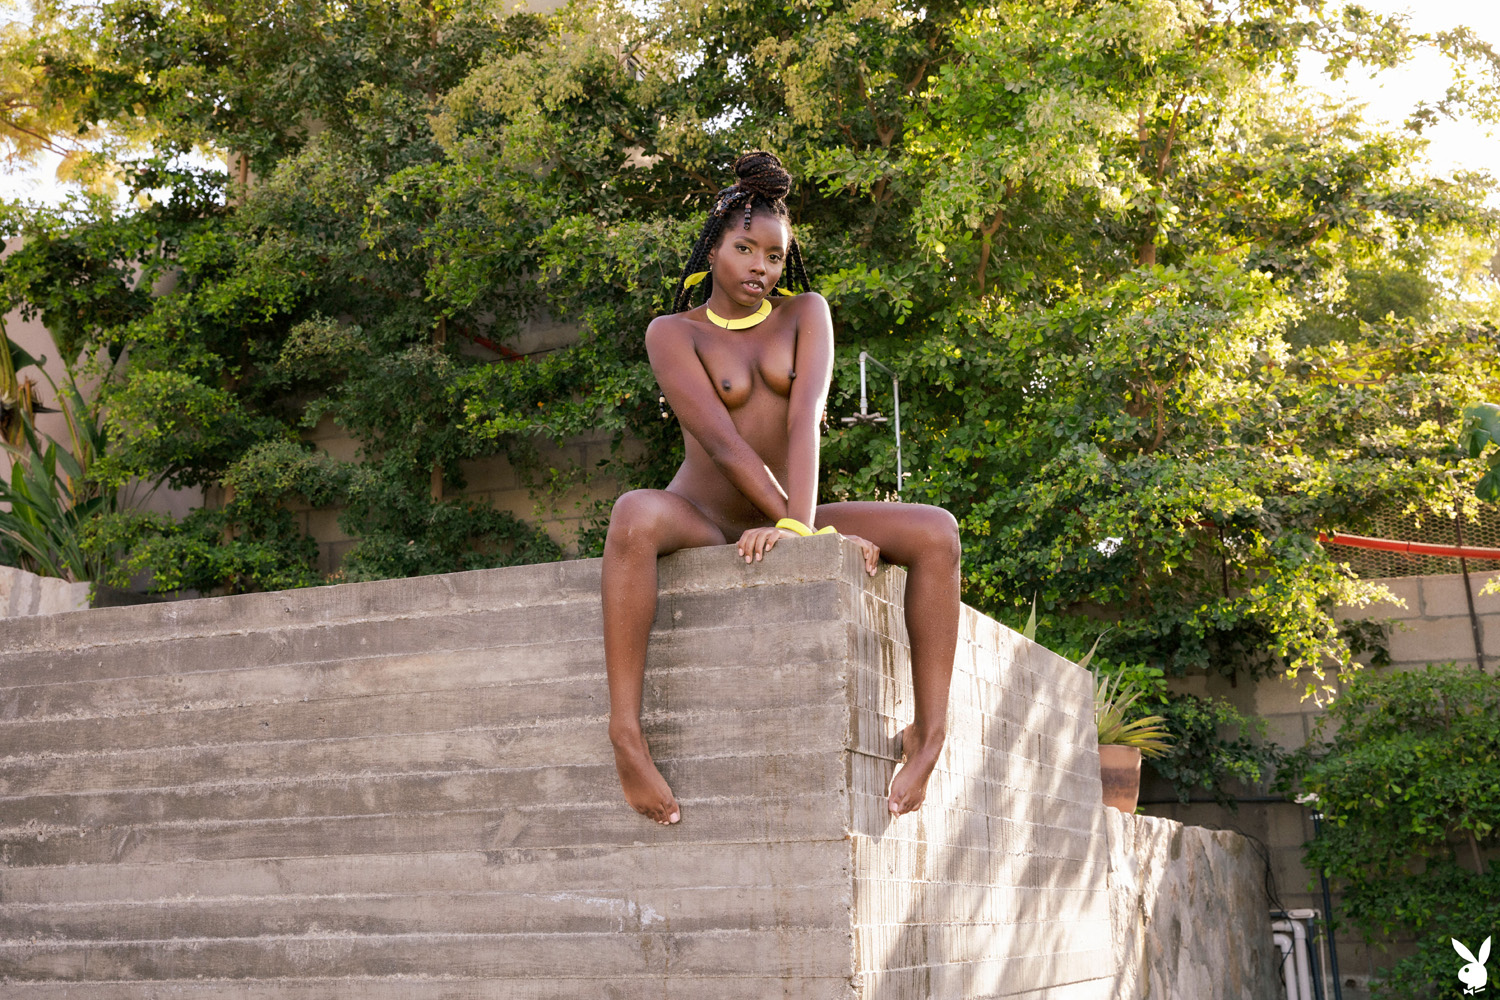 Dakota Simone shows off her exquisite figure in a tropical garden